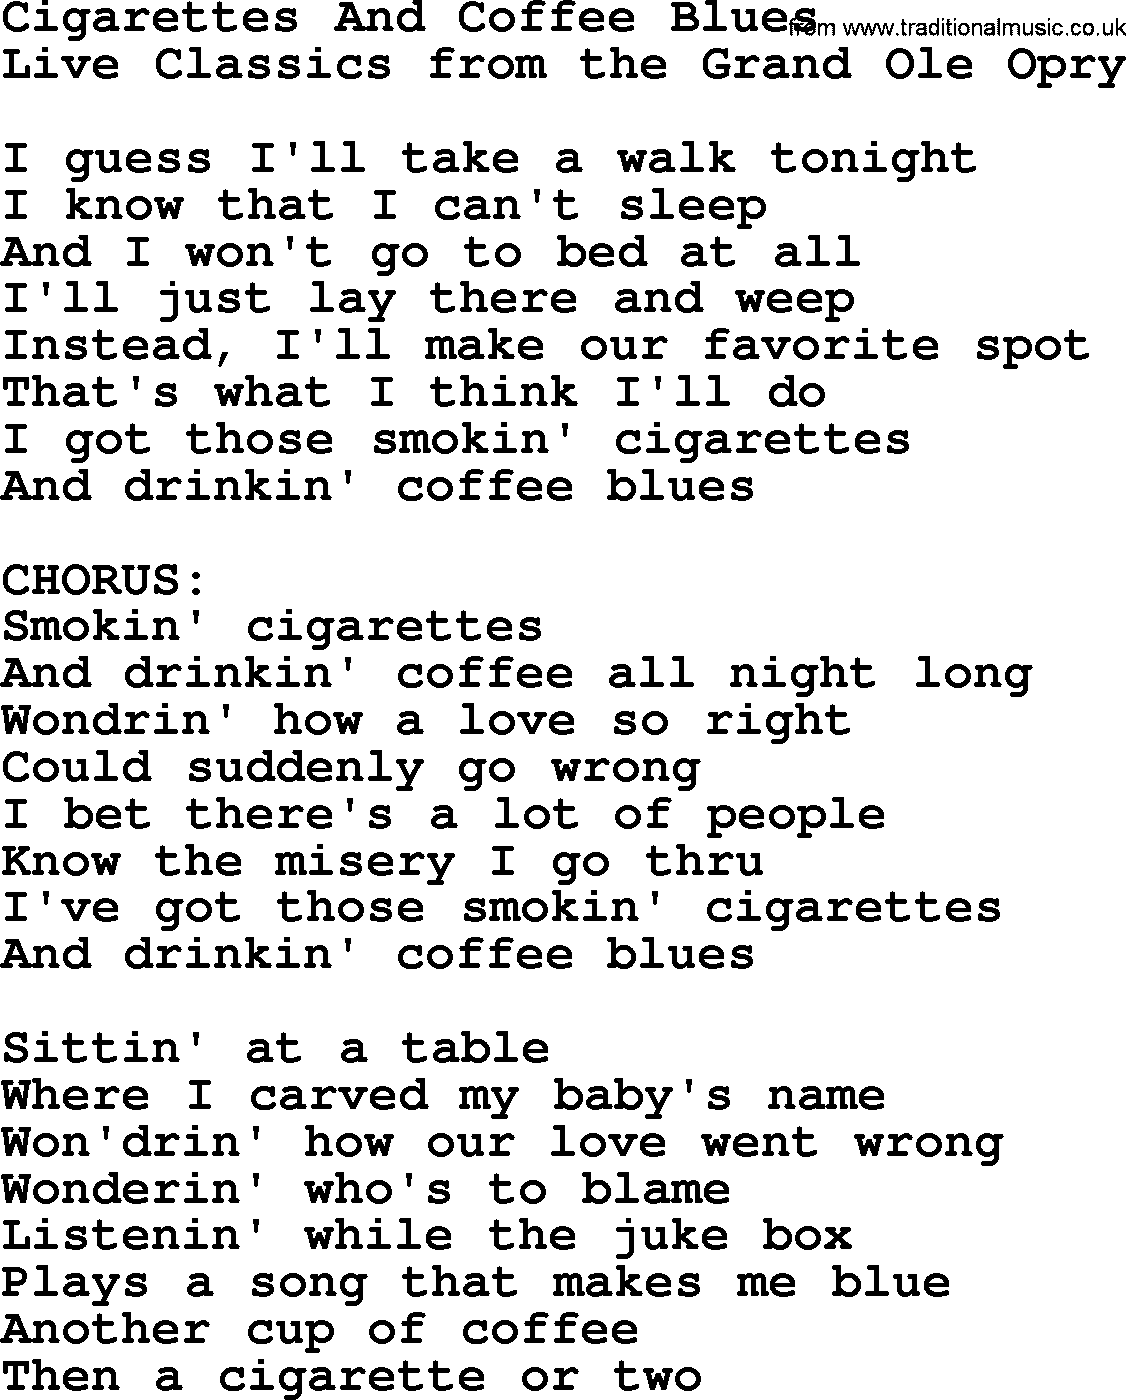 Cigarettes And Coffee Blues, by Marty Robbins - lyrics